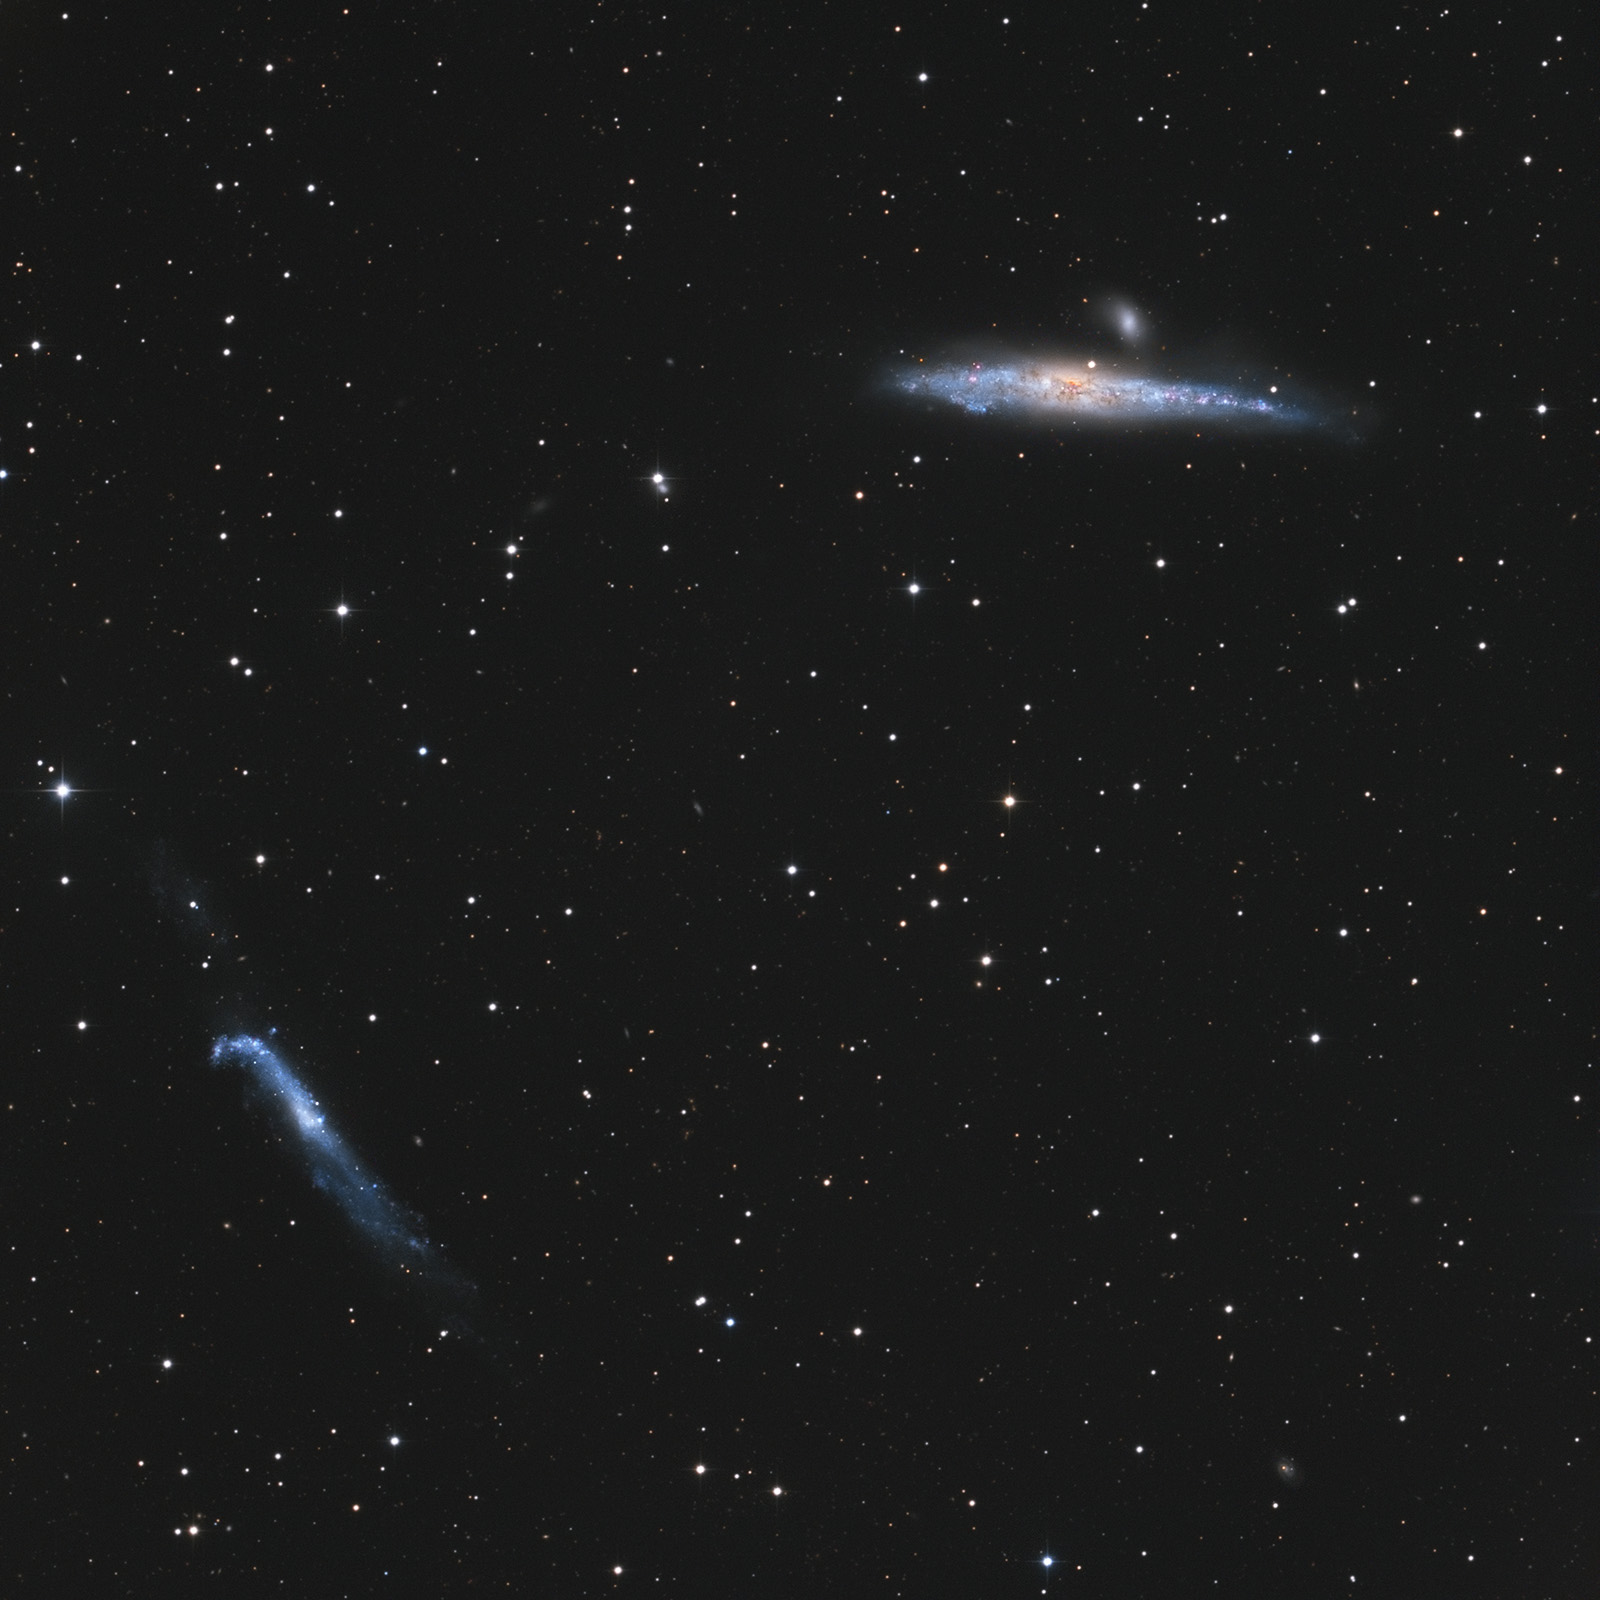 NGC4631_4656_Whale_HockeyStick_Galaxy_1600px.jpg